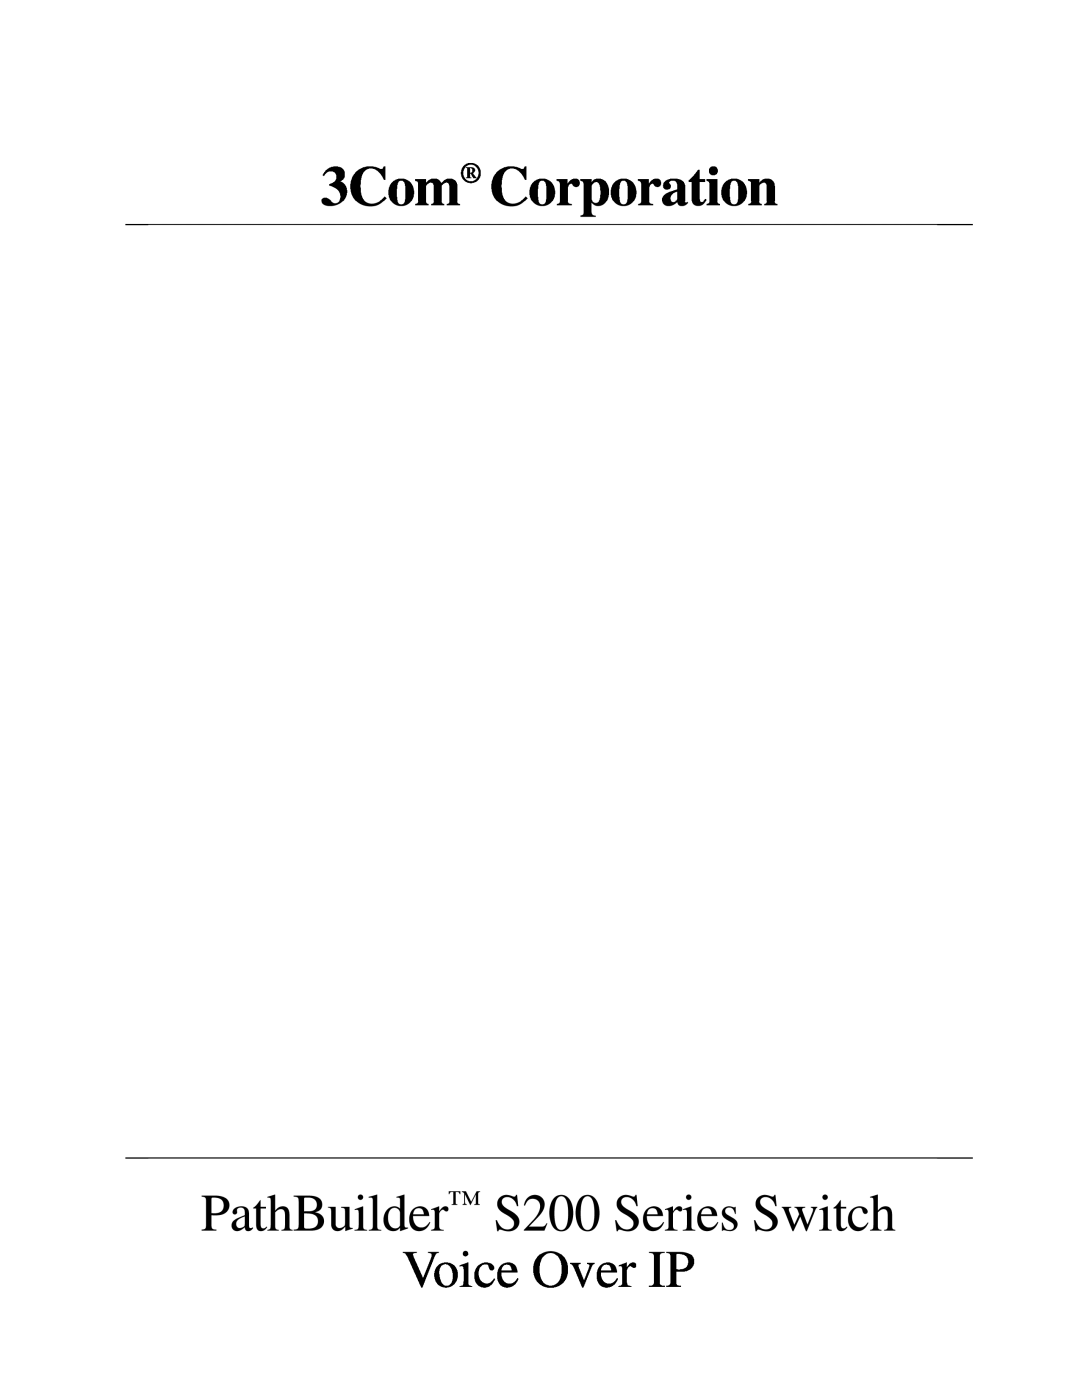 3Com manual 3Com Corporation, PathBuilder S200 Series Switch Configuring with PAD/ATPAD 